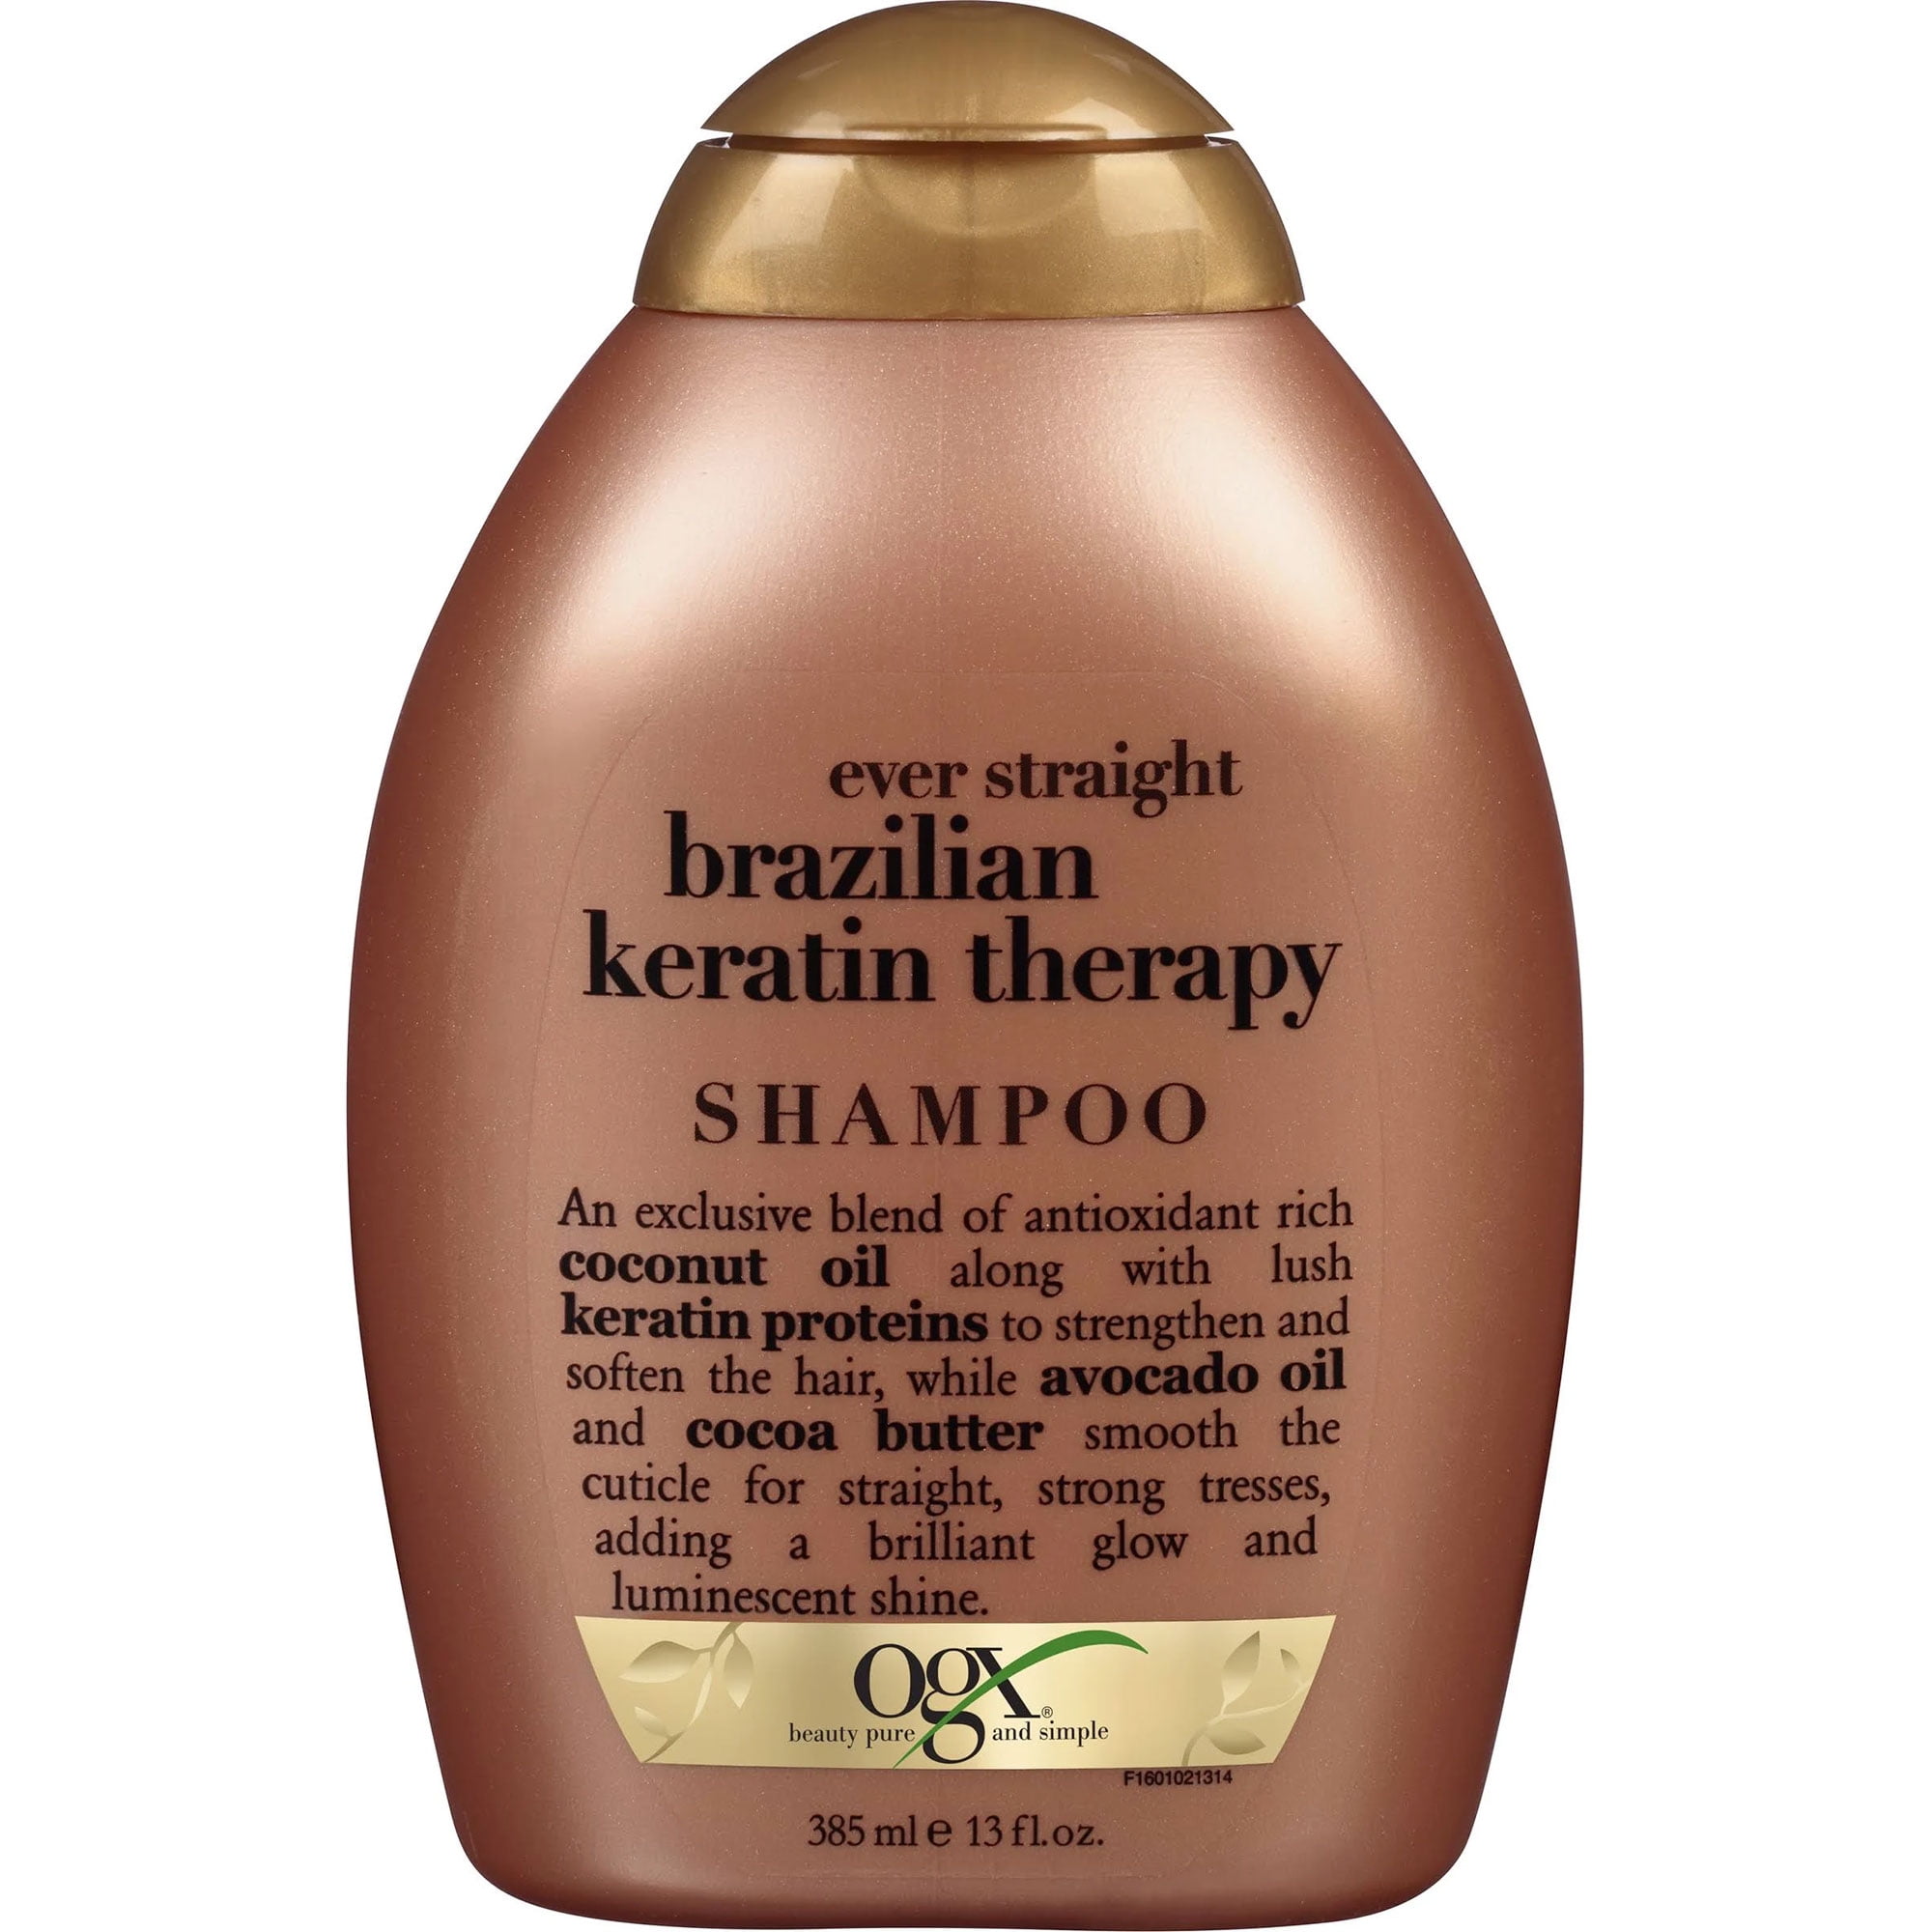 OGX Brazilian Keratin Therapy Shampoo, Oz., Pack of 3 - Walmart.com